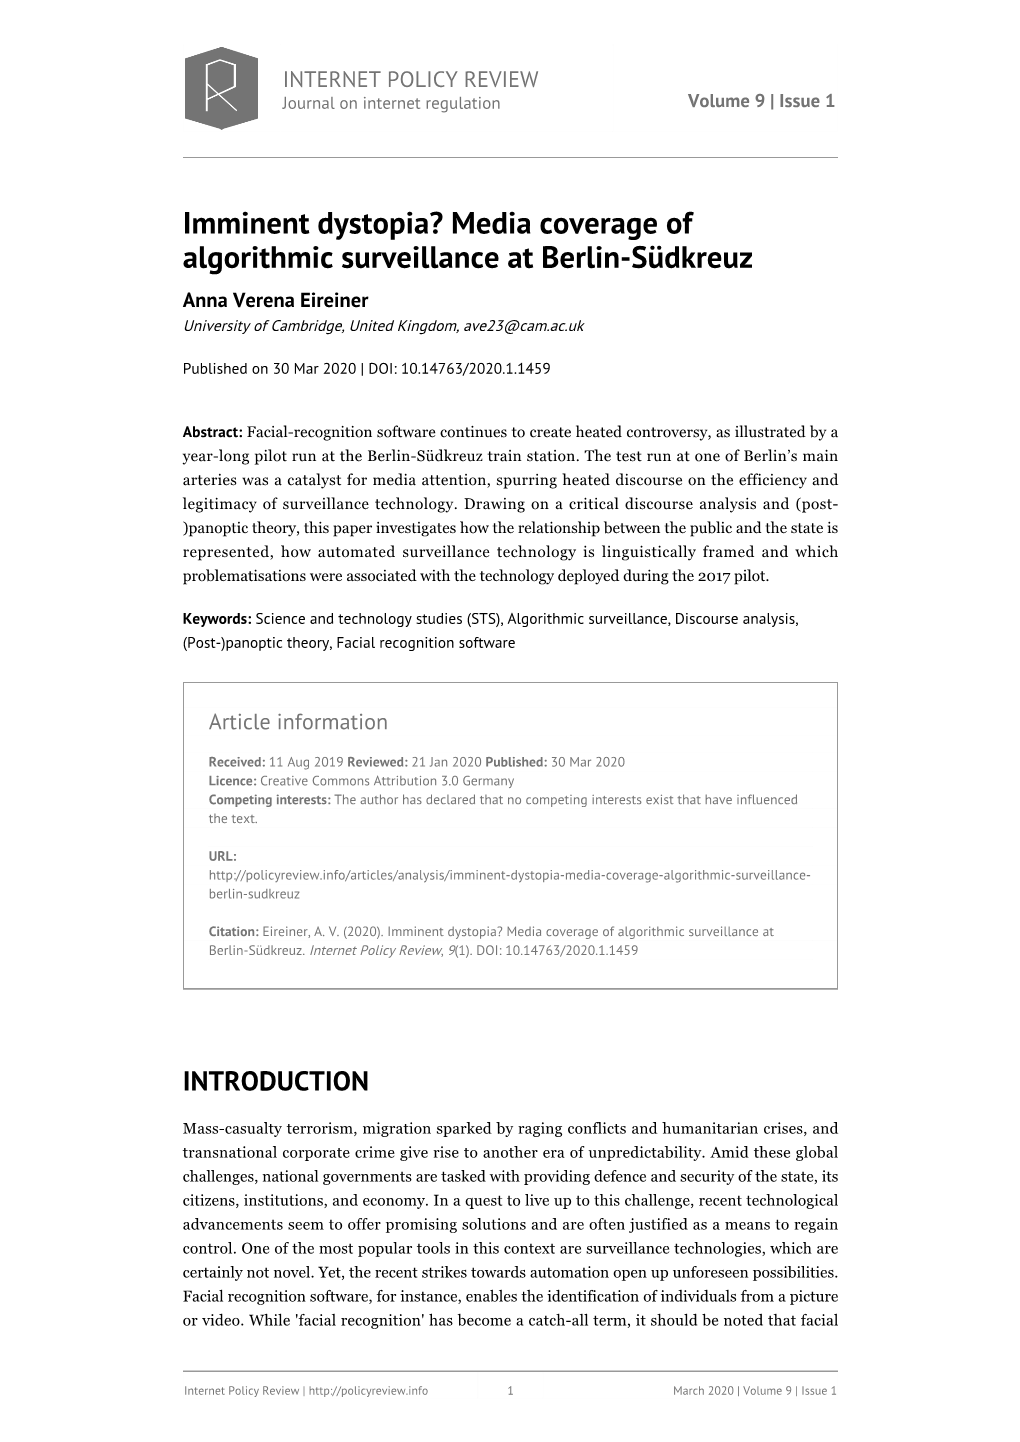 Media Coverage of Algorithmic Surveillance at Berlin-Südkreuz Anna Verena Eireiner University of Cambridge, United Kingdom, Ave23@Cam.Ac.Uk